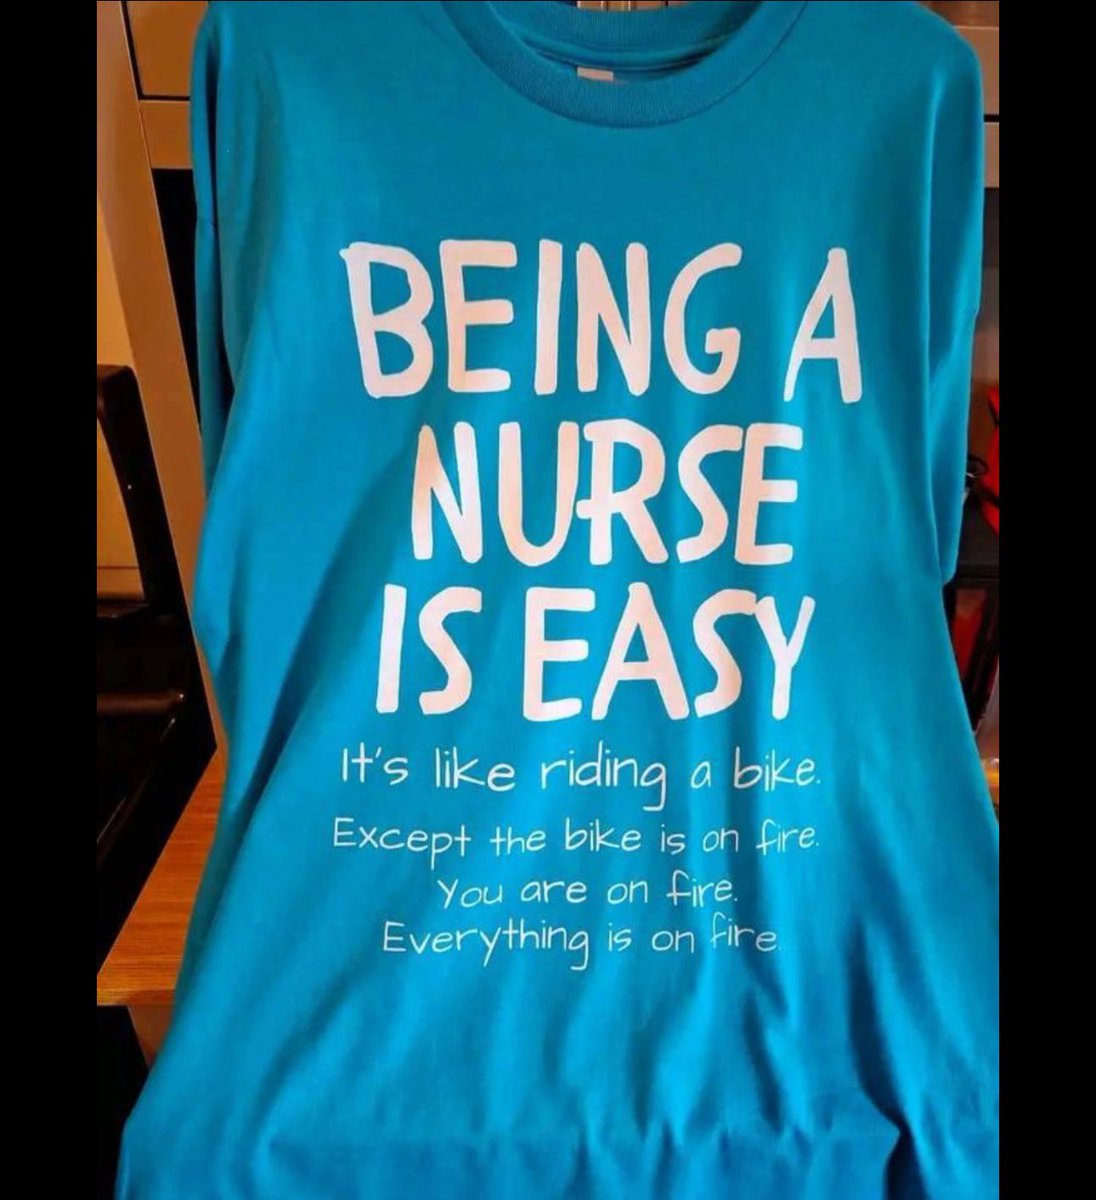 Just in a nutshell 😂😂
.
Follow for more 😁🔥
#nursememes #nursememe #nursesofinstagram #newgradnurse #workhumor #workmeme #nursinggraduate #nurseloveofficial